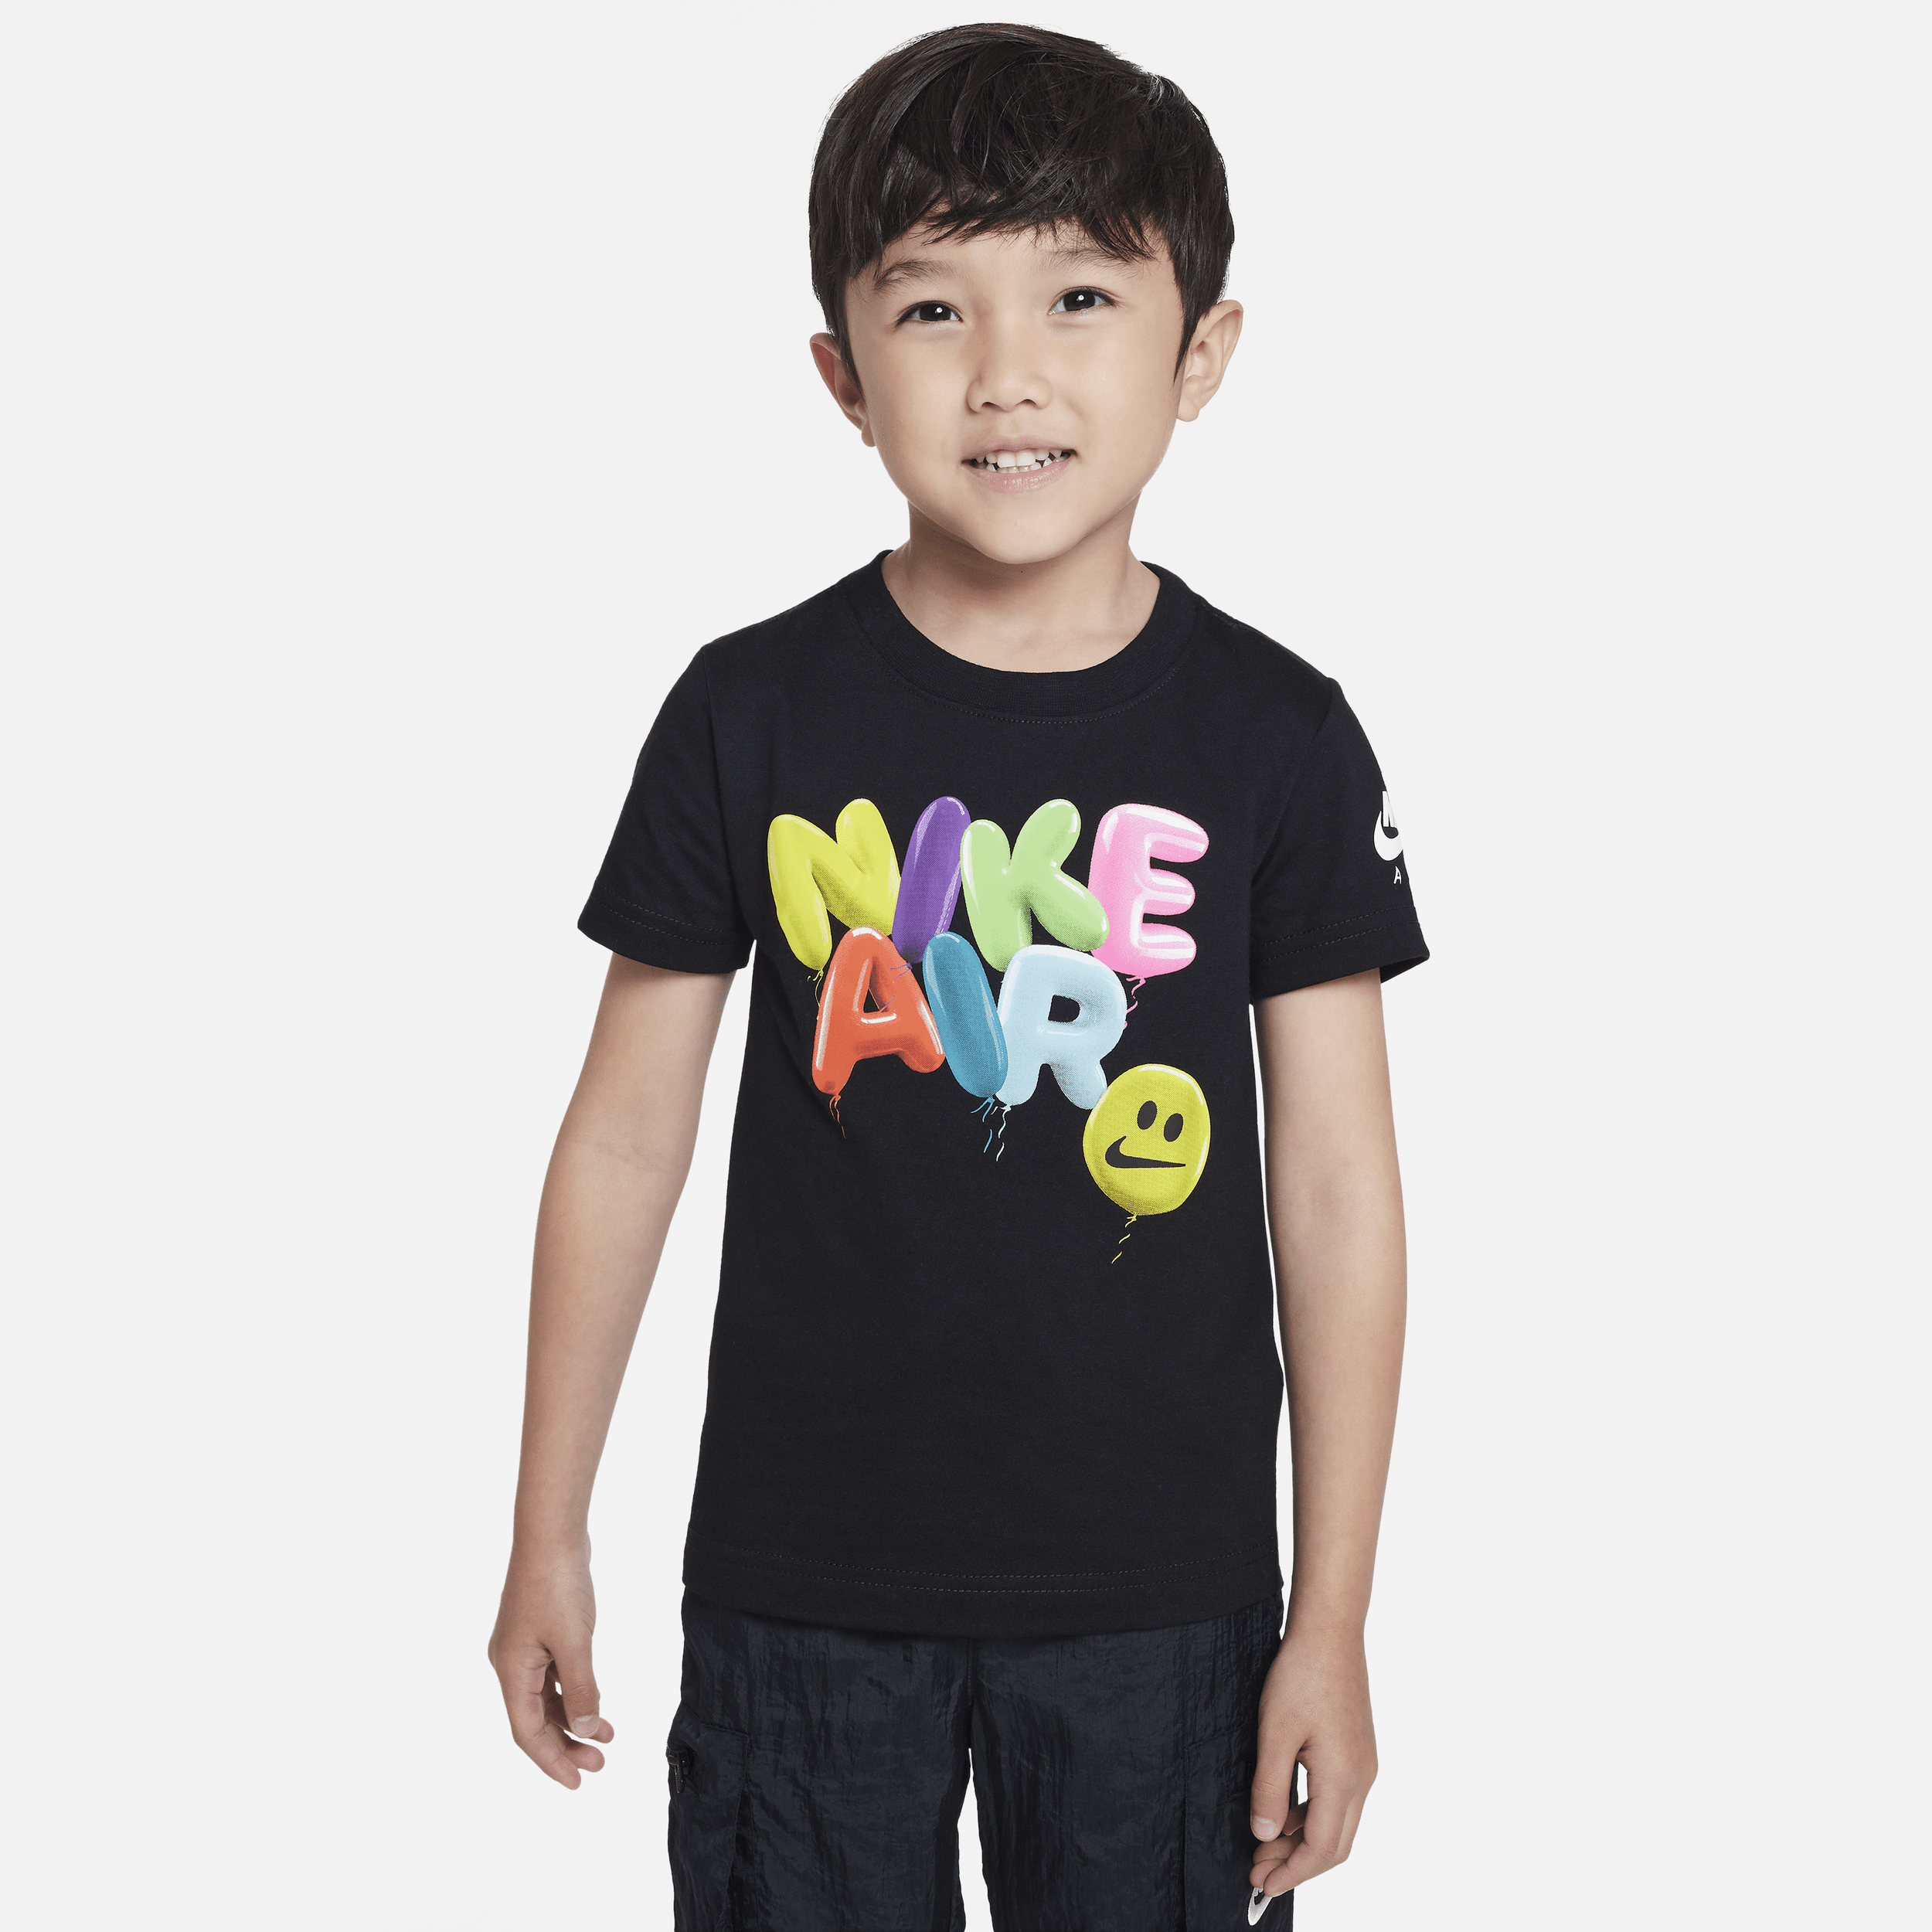 Nike Air Balloon Tee-T-shirt til mindre børn - sort